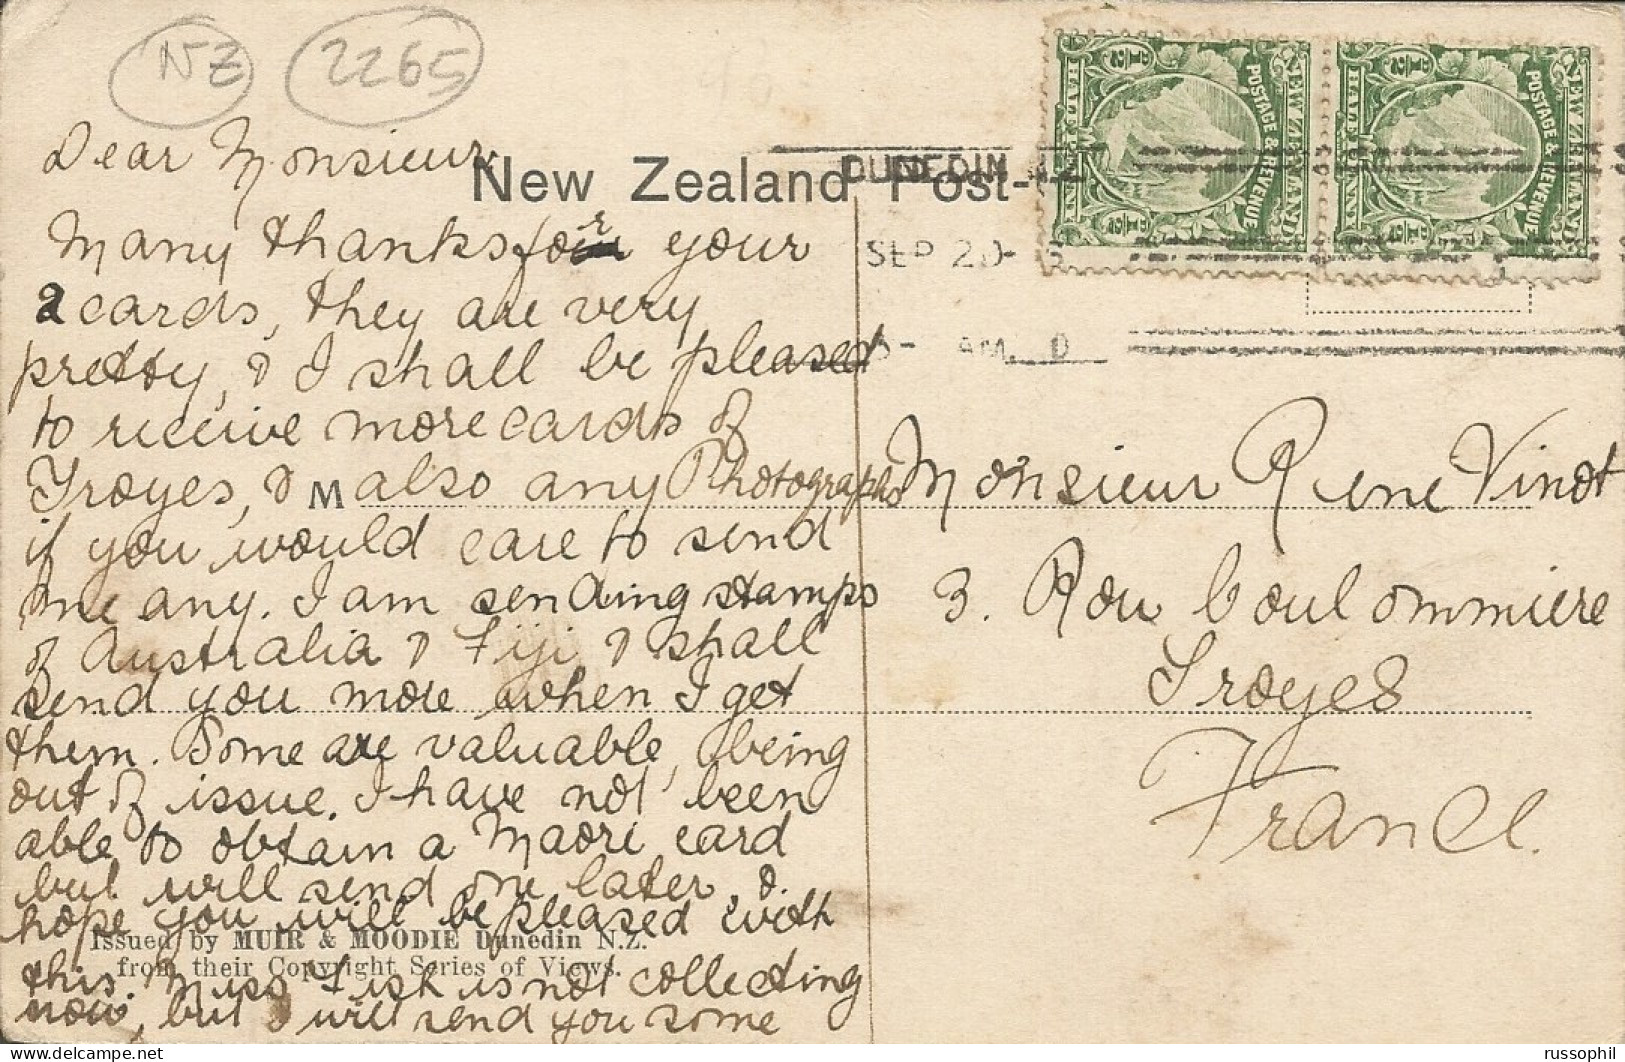 NZ - MITRE PEAK (5560 FEET) - MILFORD SOUND - PUB. BY MUIR REF #174 - 1906 - Nouvelle-Zélande